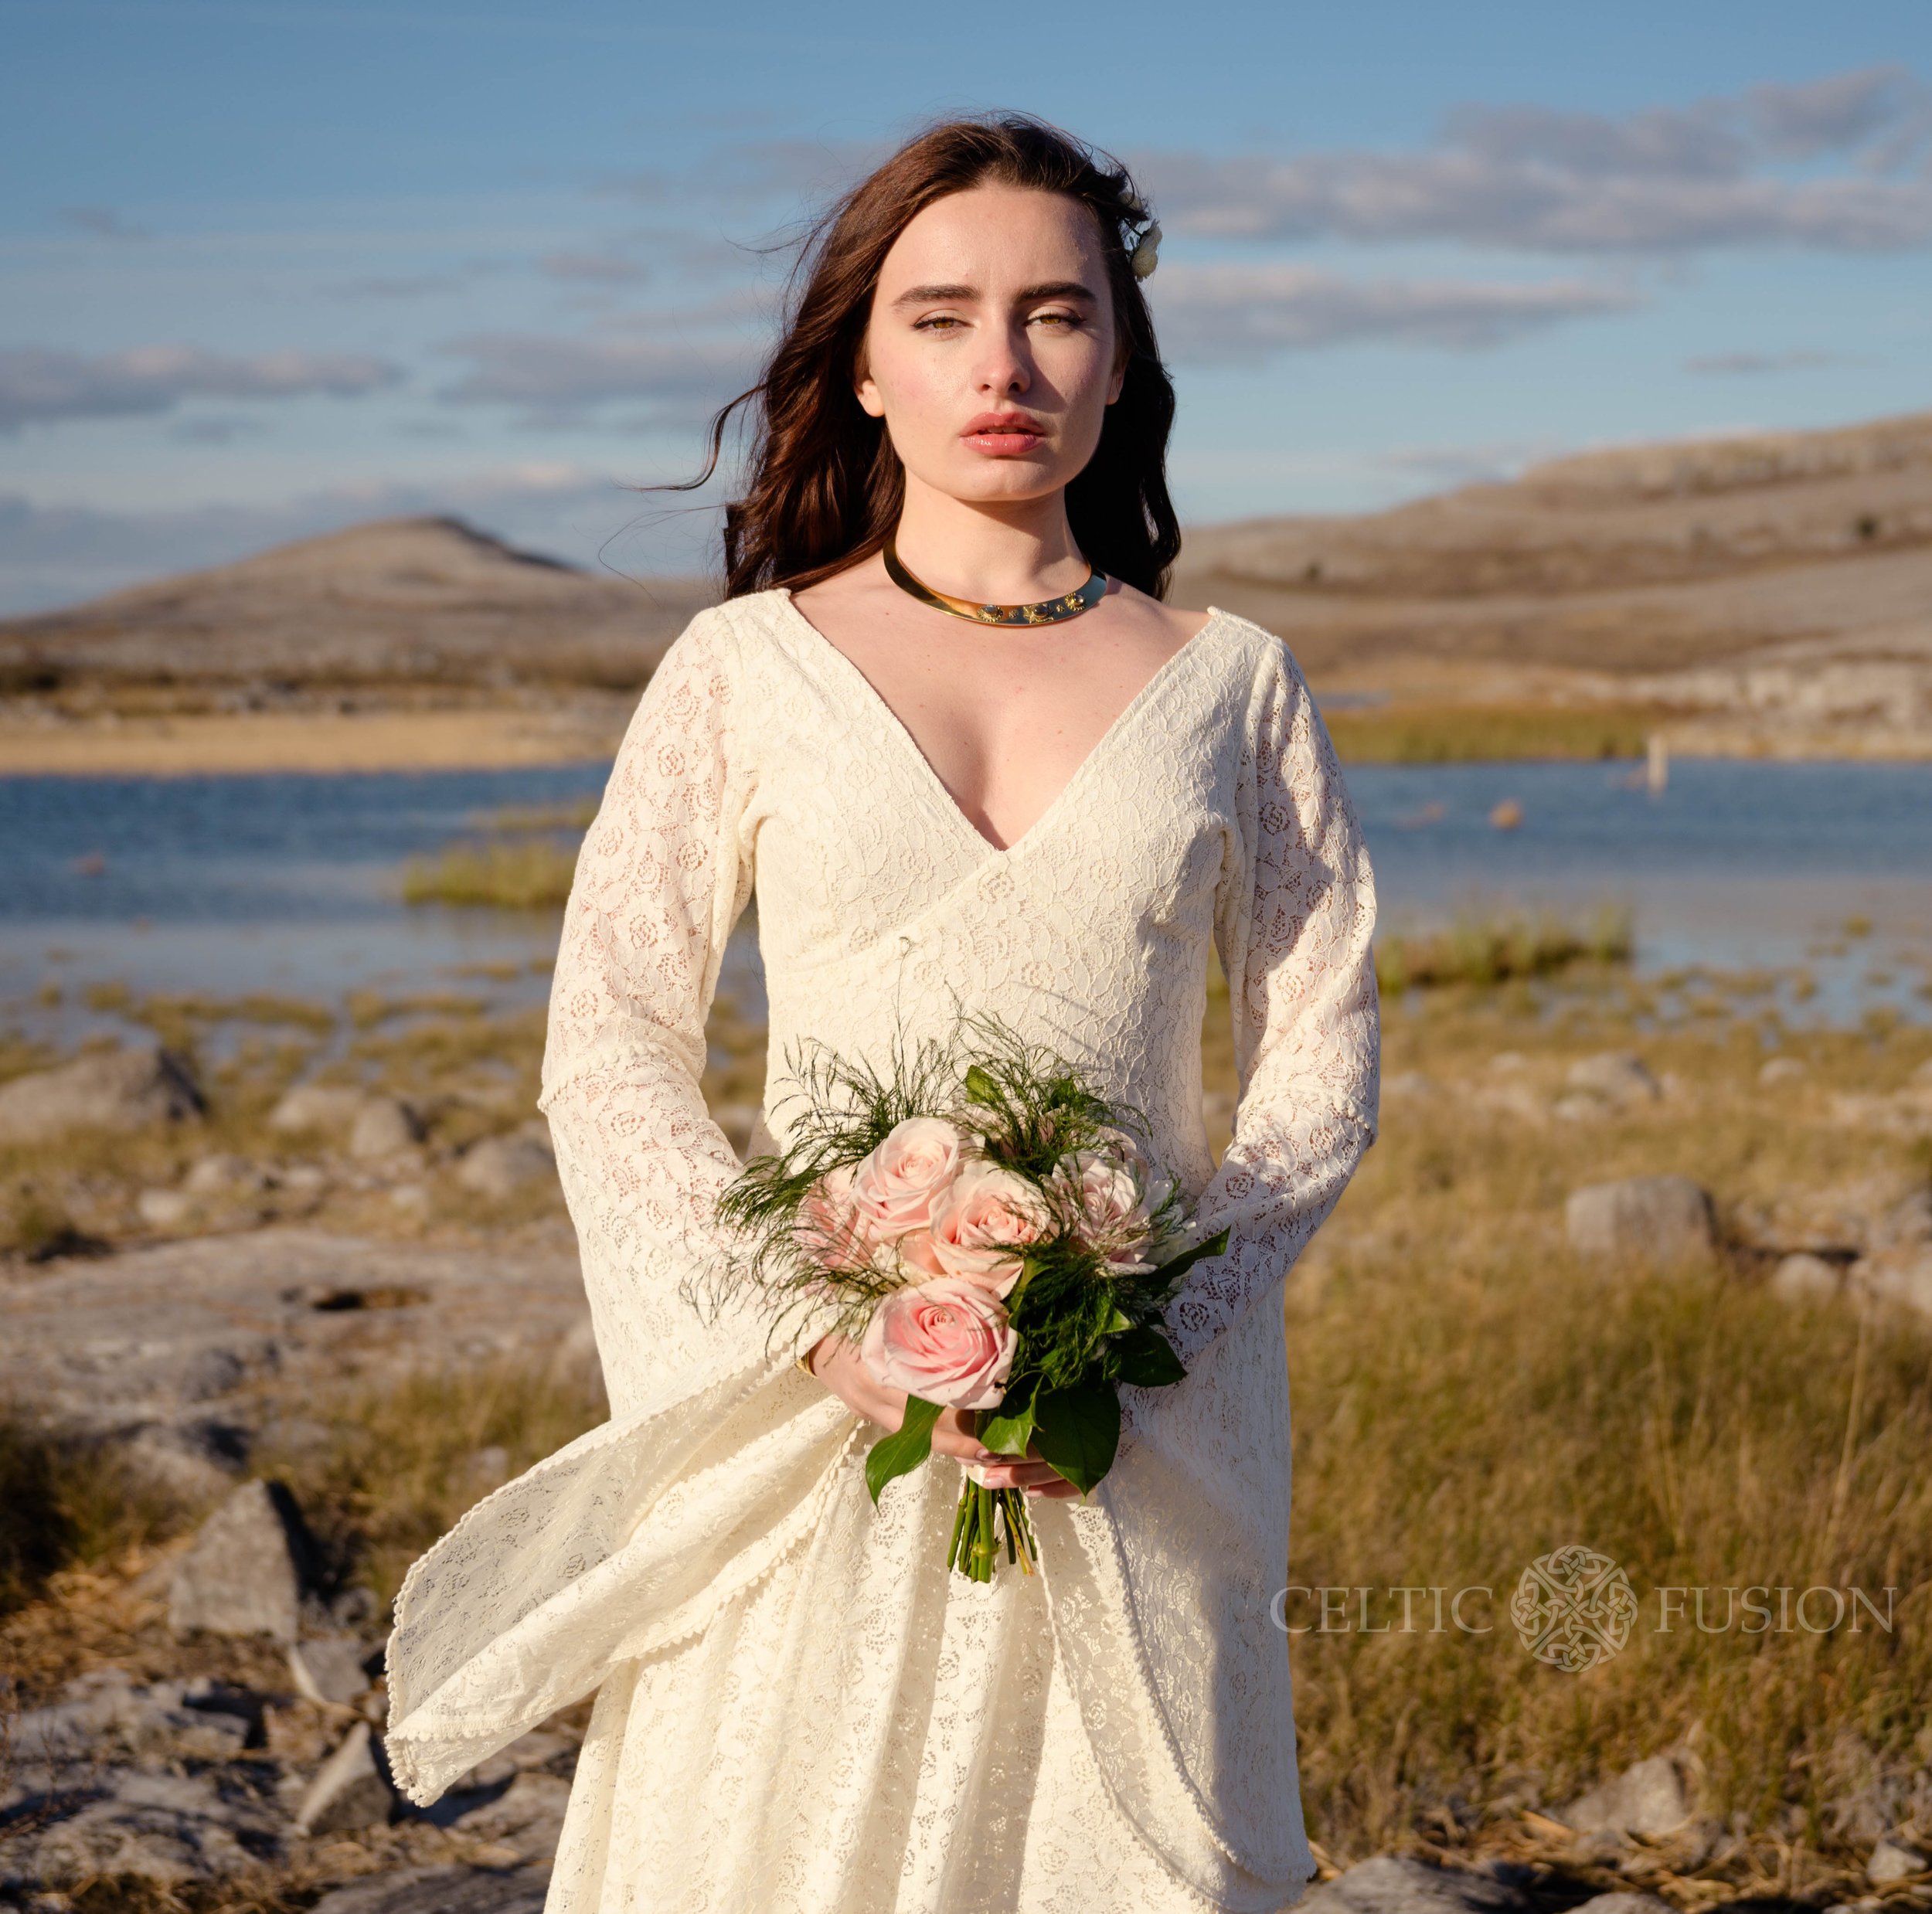 Celtic Wedding Dress With Chiffon Long Sleeves Bridal Gown From Award  Winning Wedding Dress Fantasy - Etsy